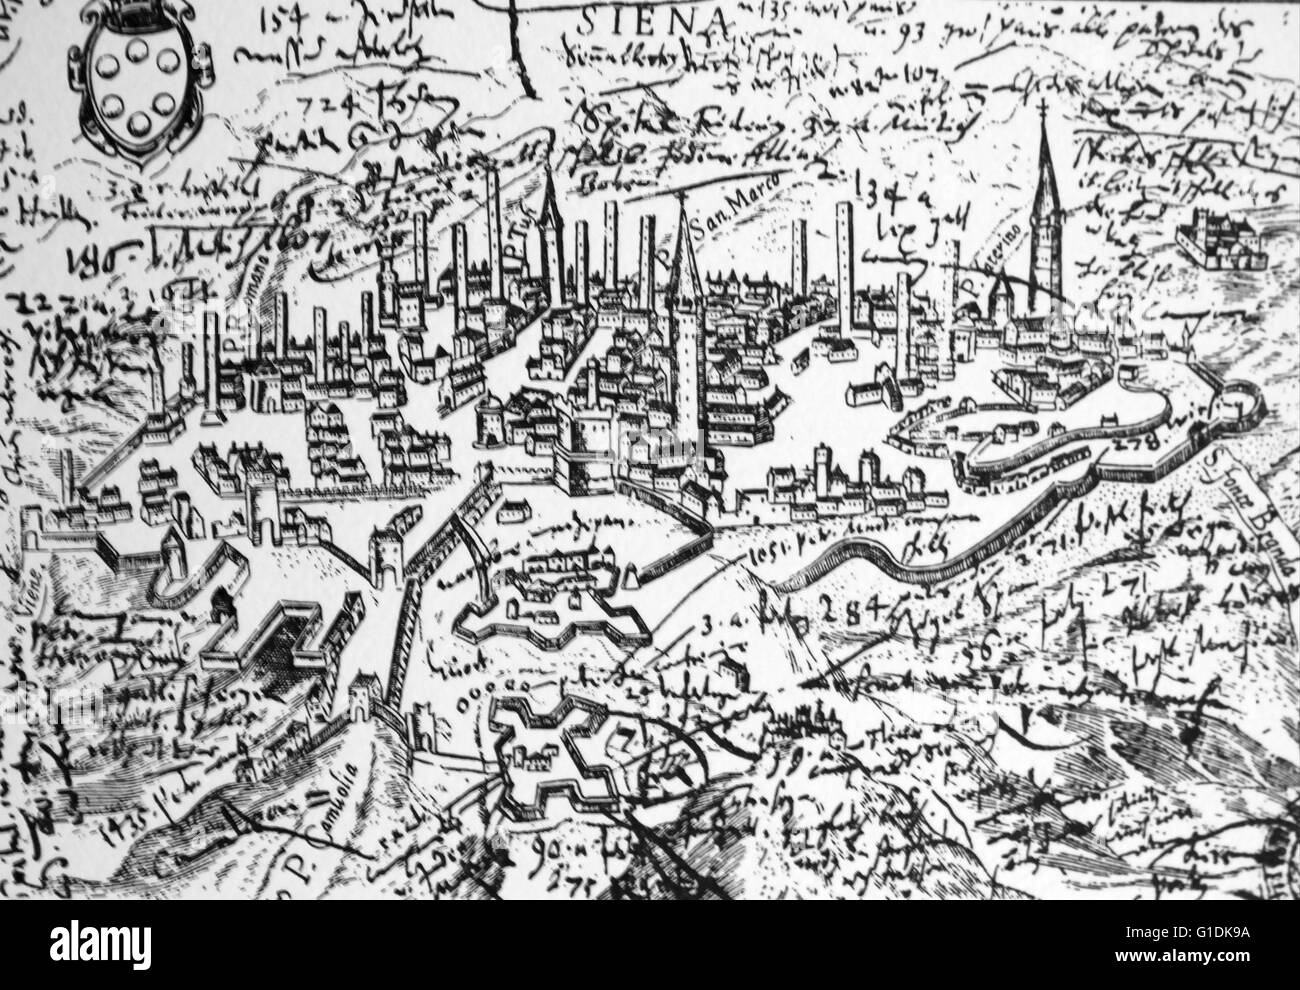 Illustrierte Karte von Siena Medici. Stockfoto